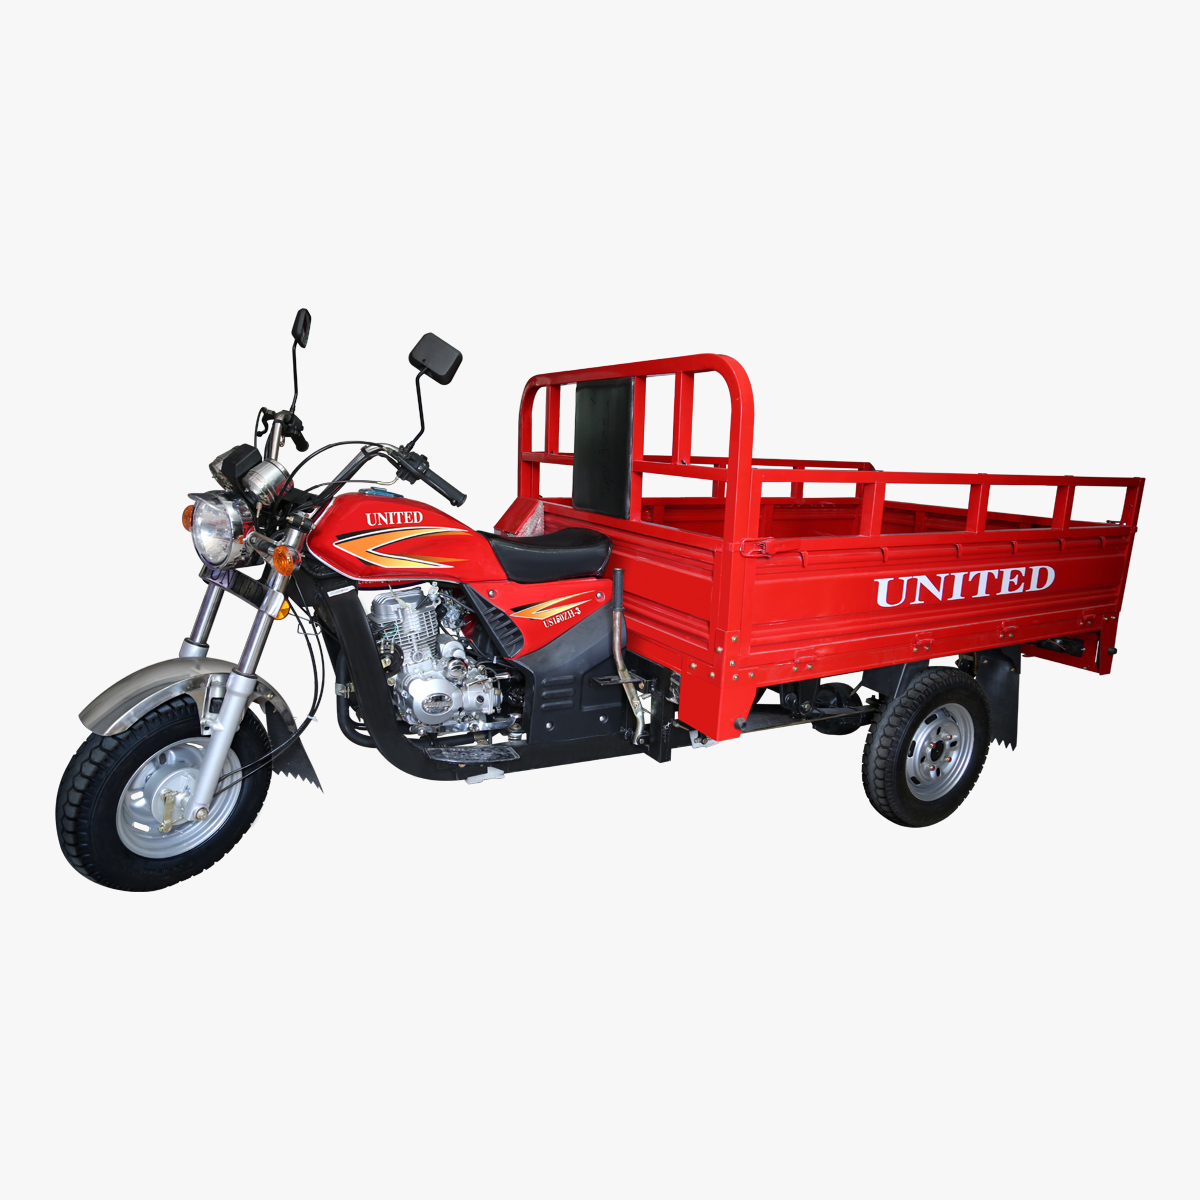 United Loader 150cc Price in Pakistan 2022